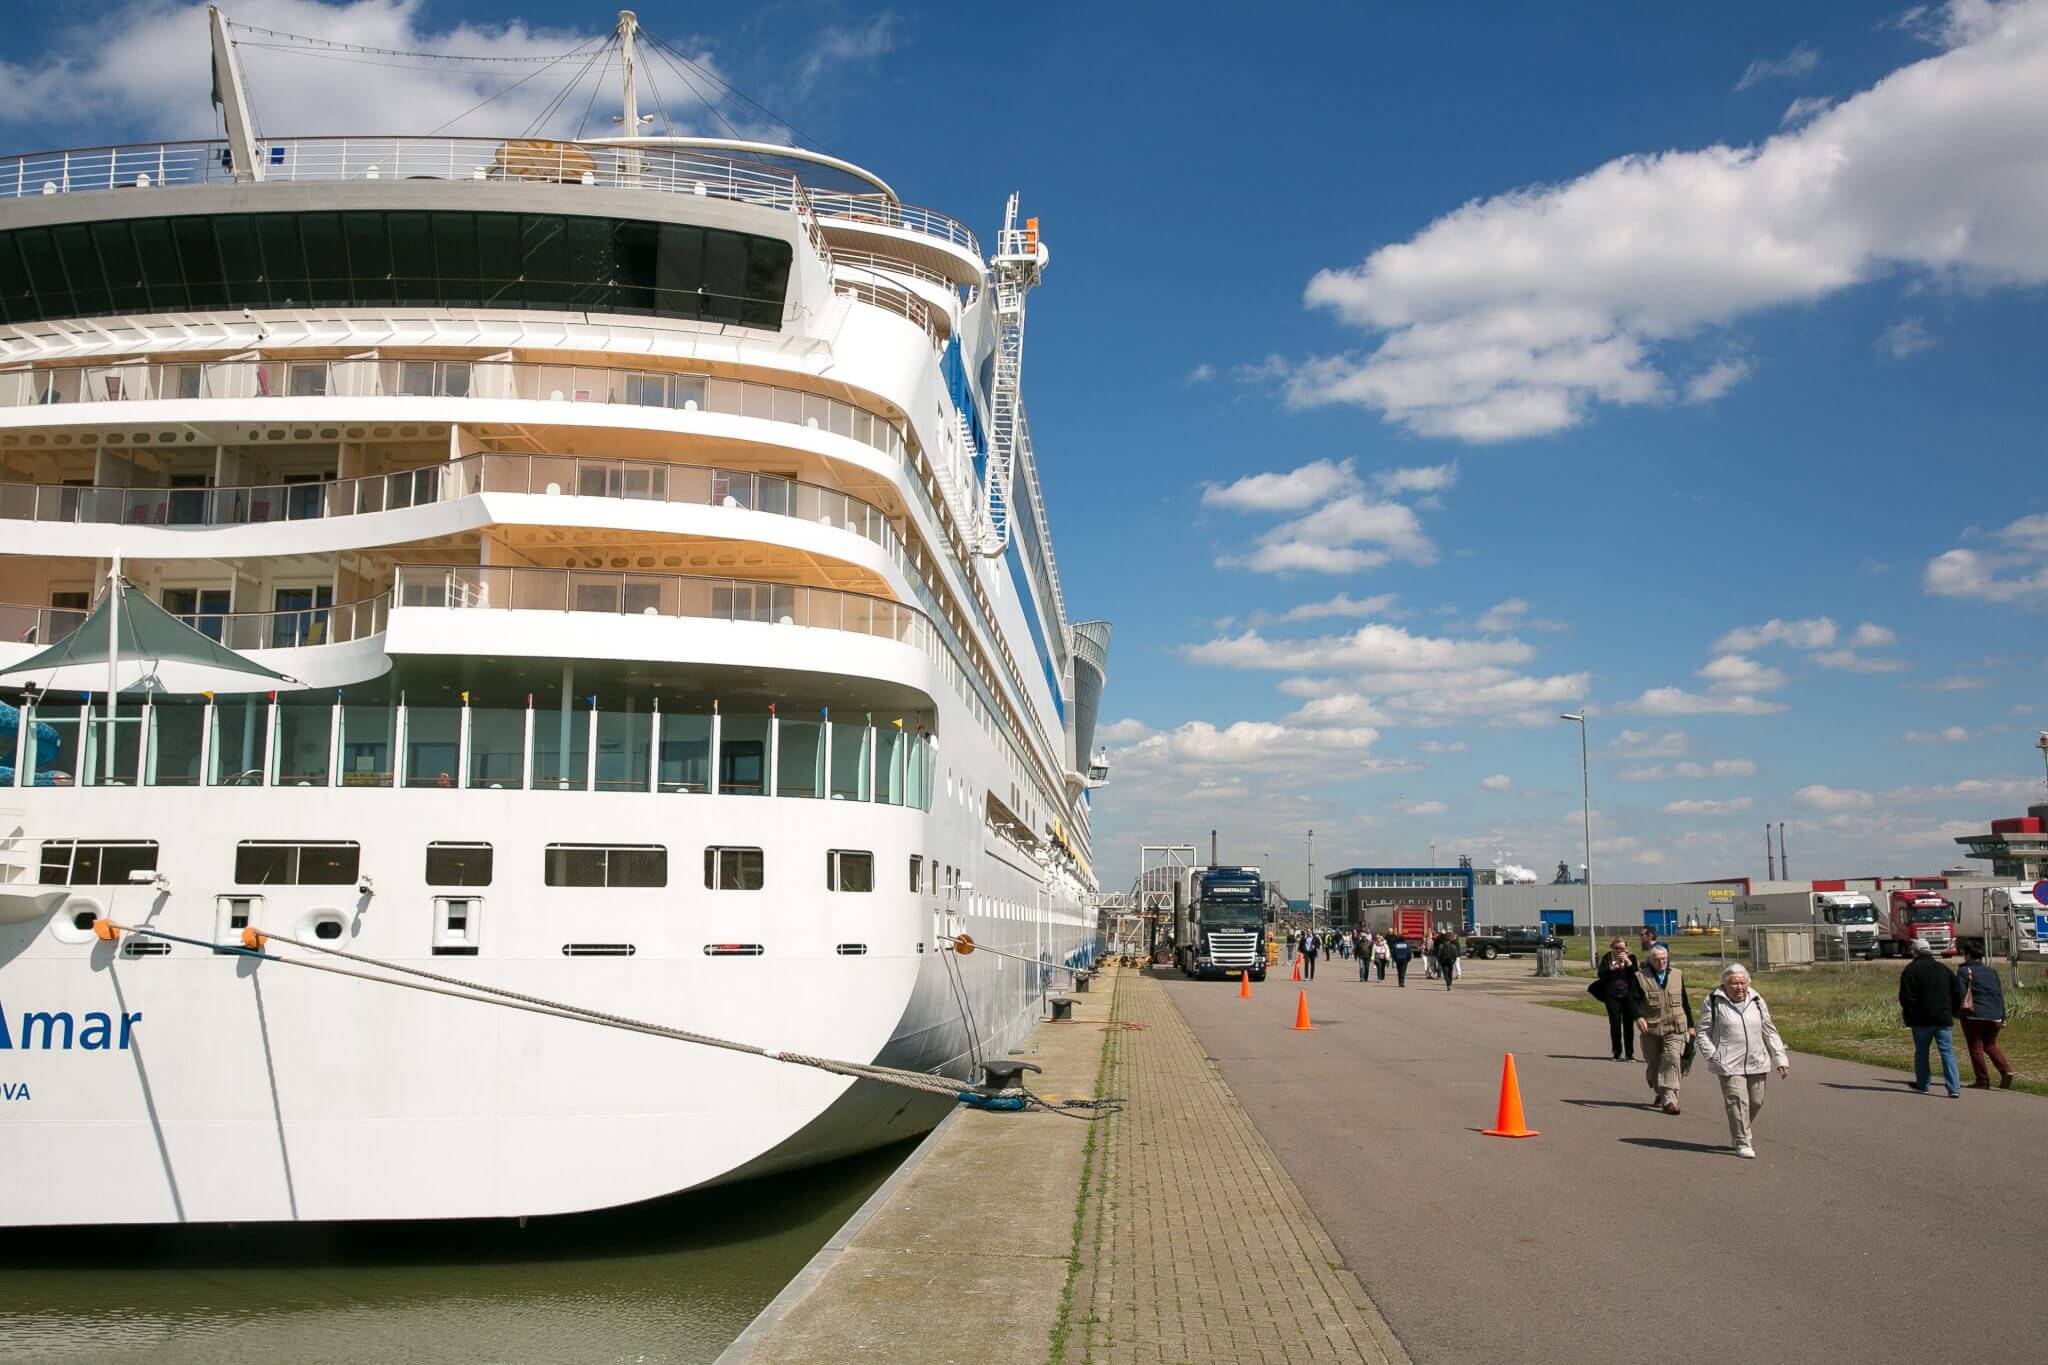 amsterdam cruise ship arrivals